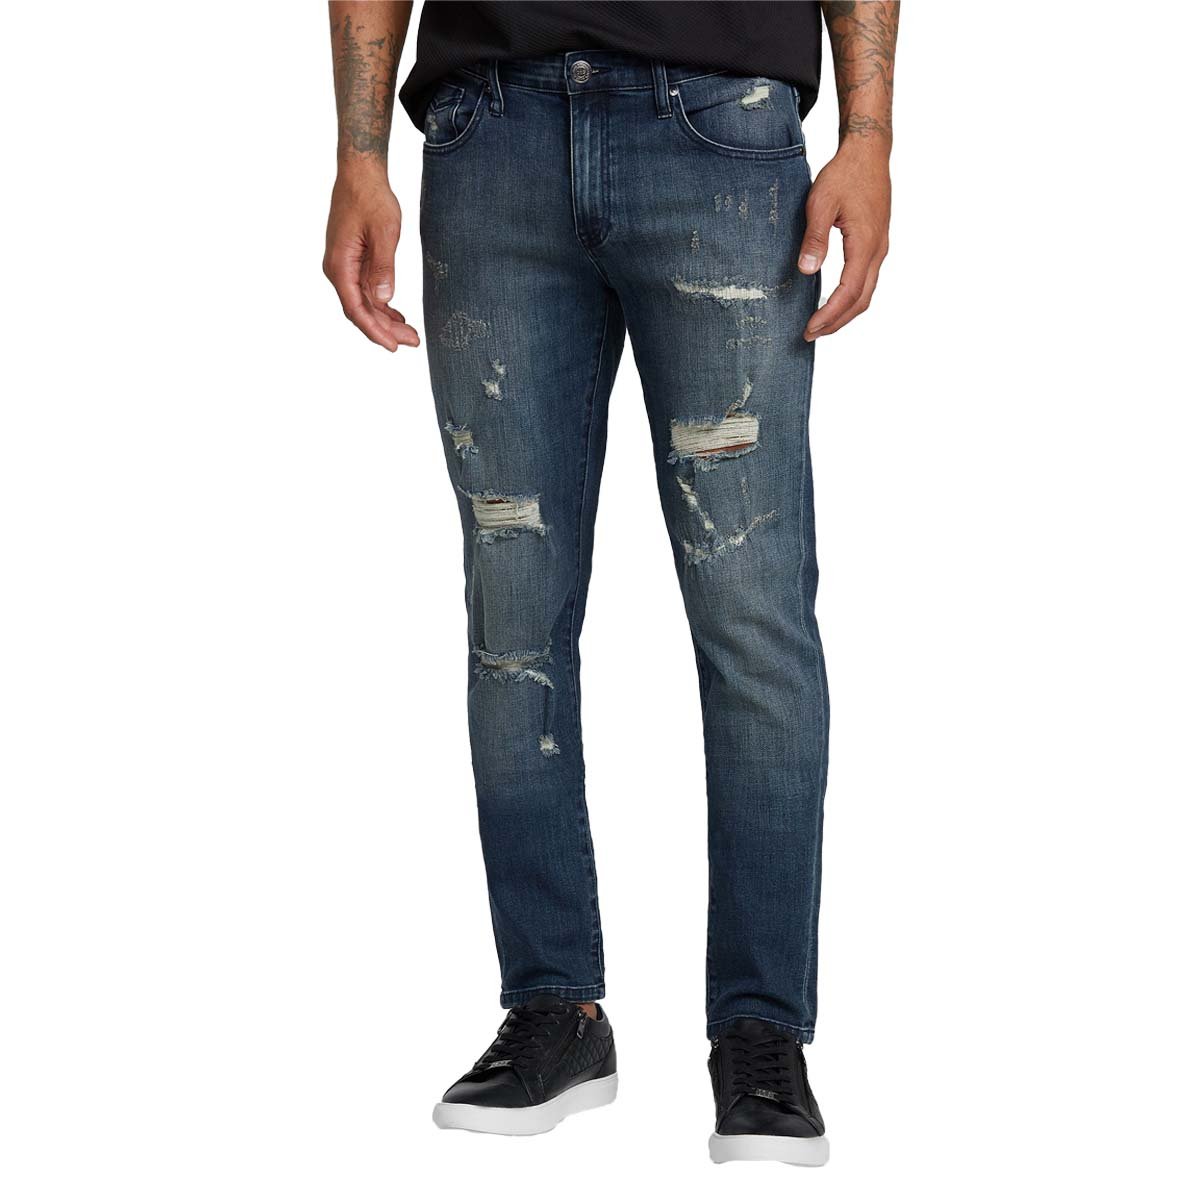 Jeans Casual con Desgaste G By Guess para Caballero